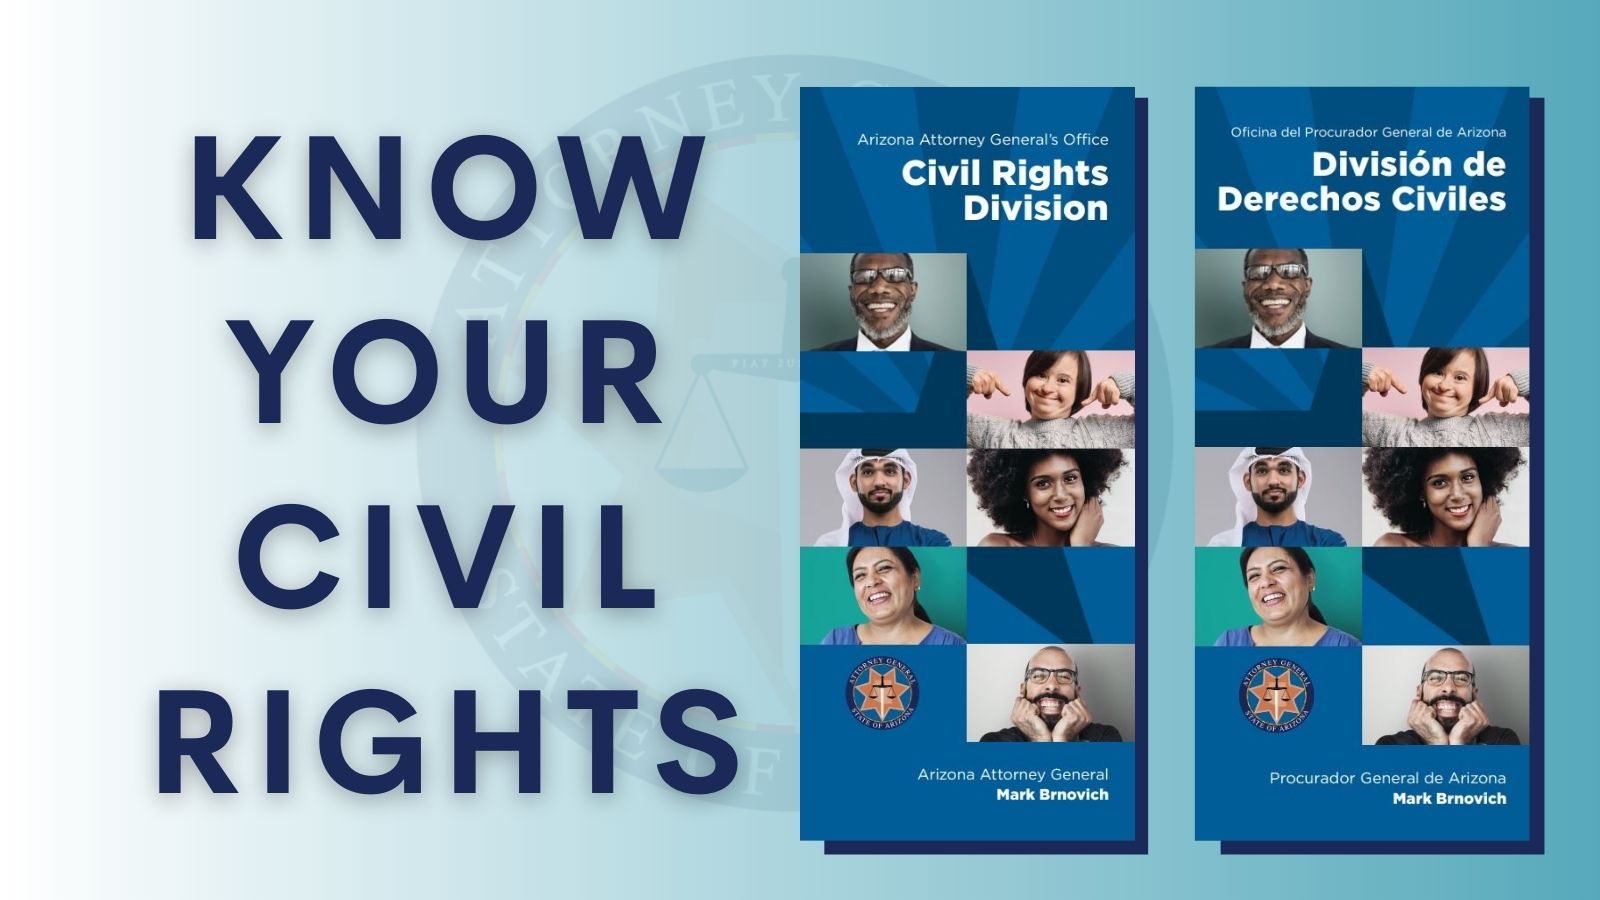 Civil right pamphlet image